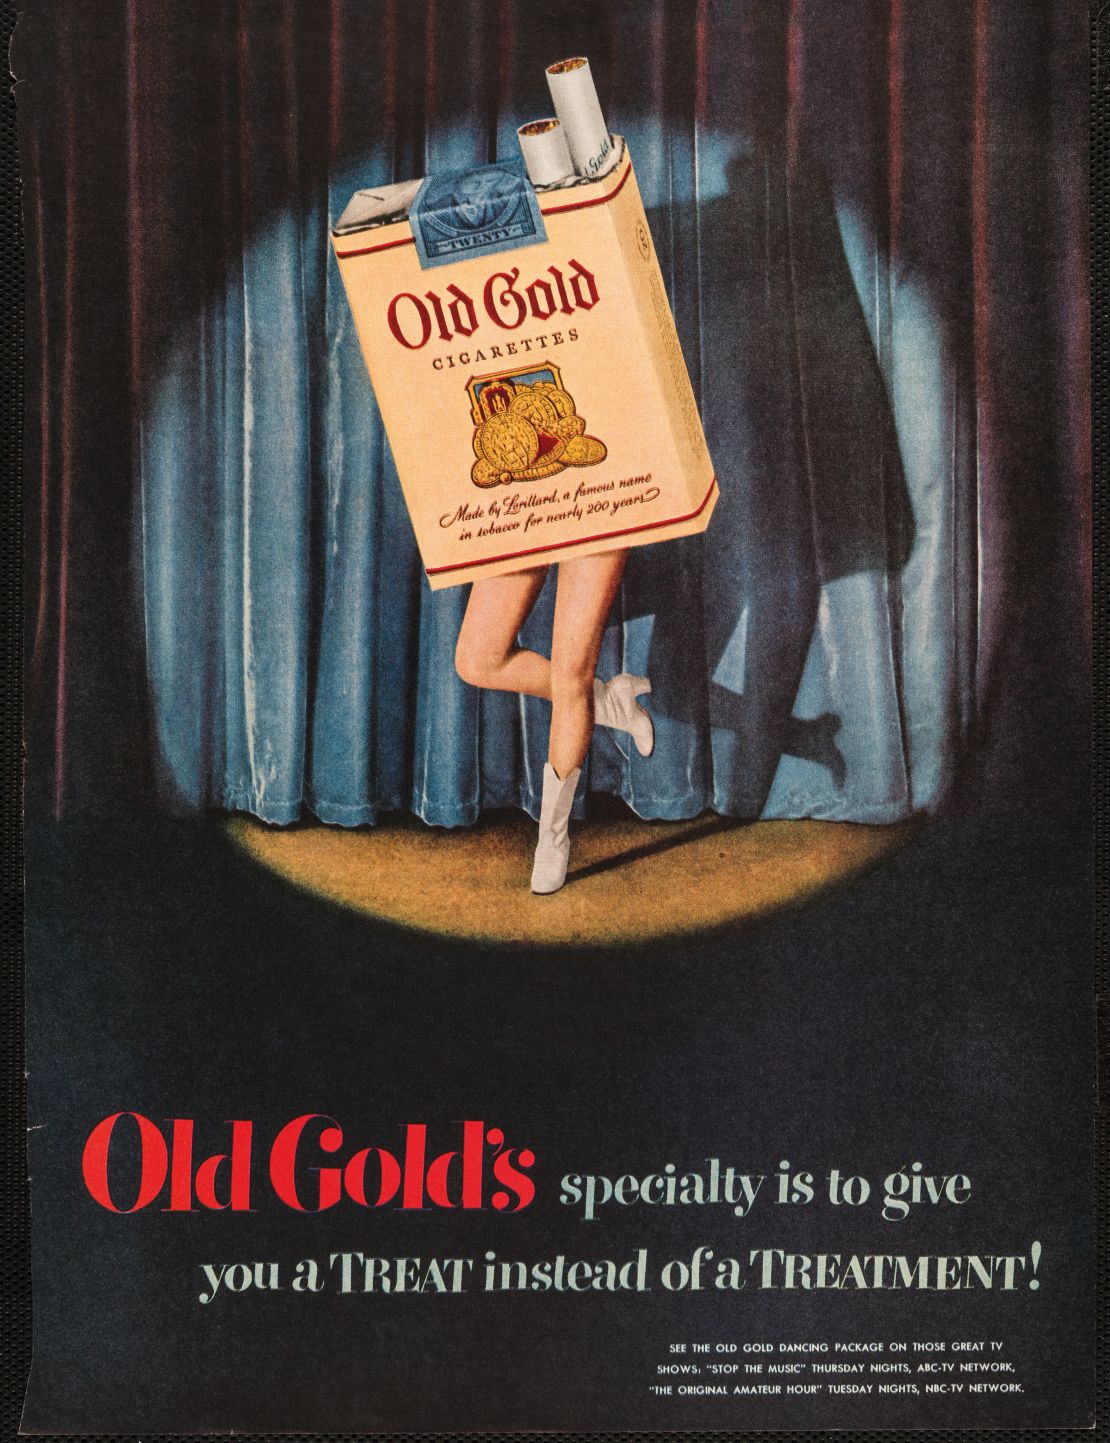 Vintage cigarette and alcohol ads